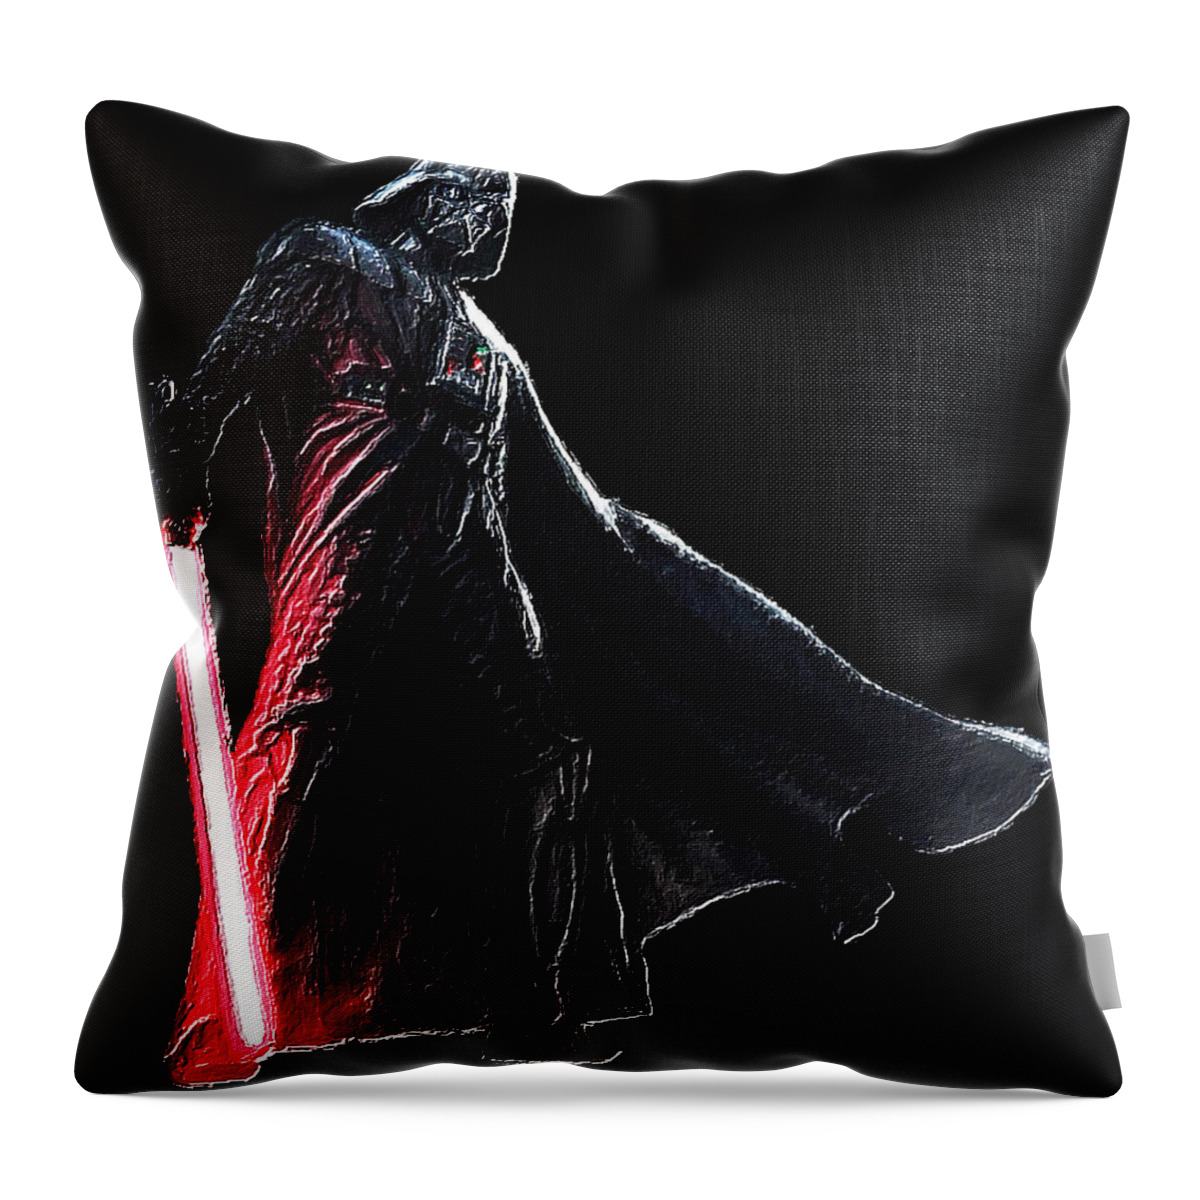 Darth Vader Throw Pillow featuring the painting Darth Vader Star Wars by Tony Rubino